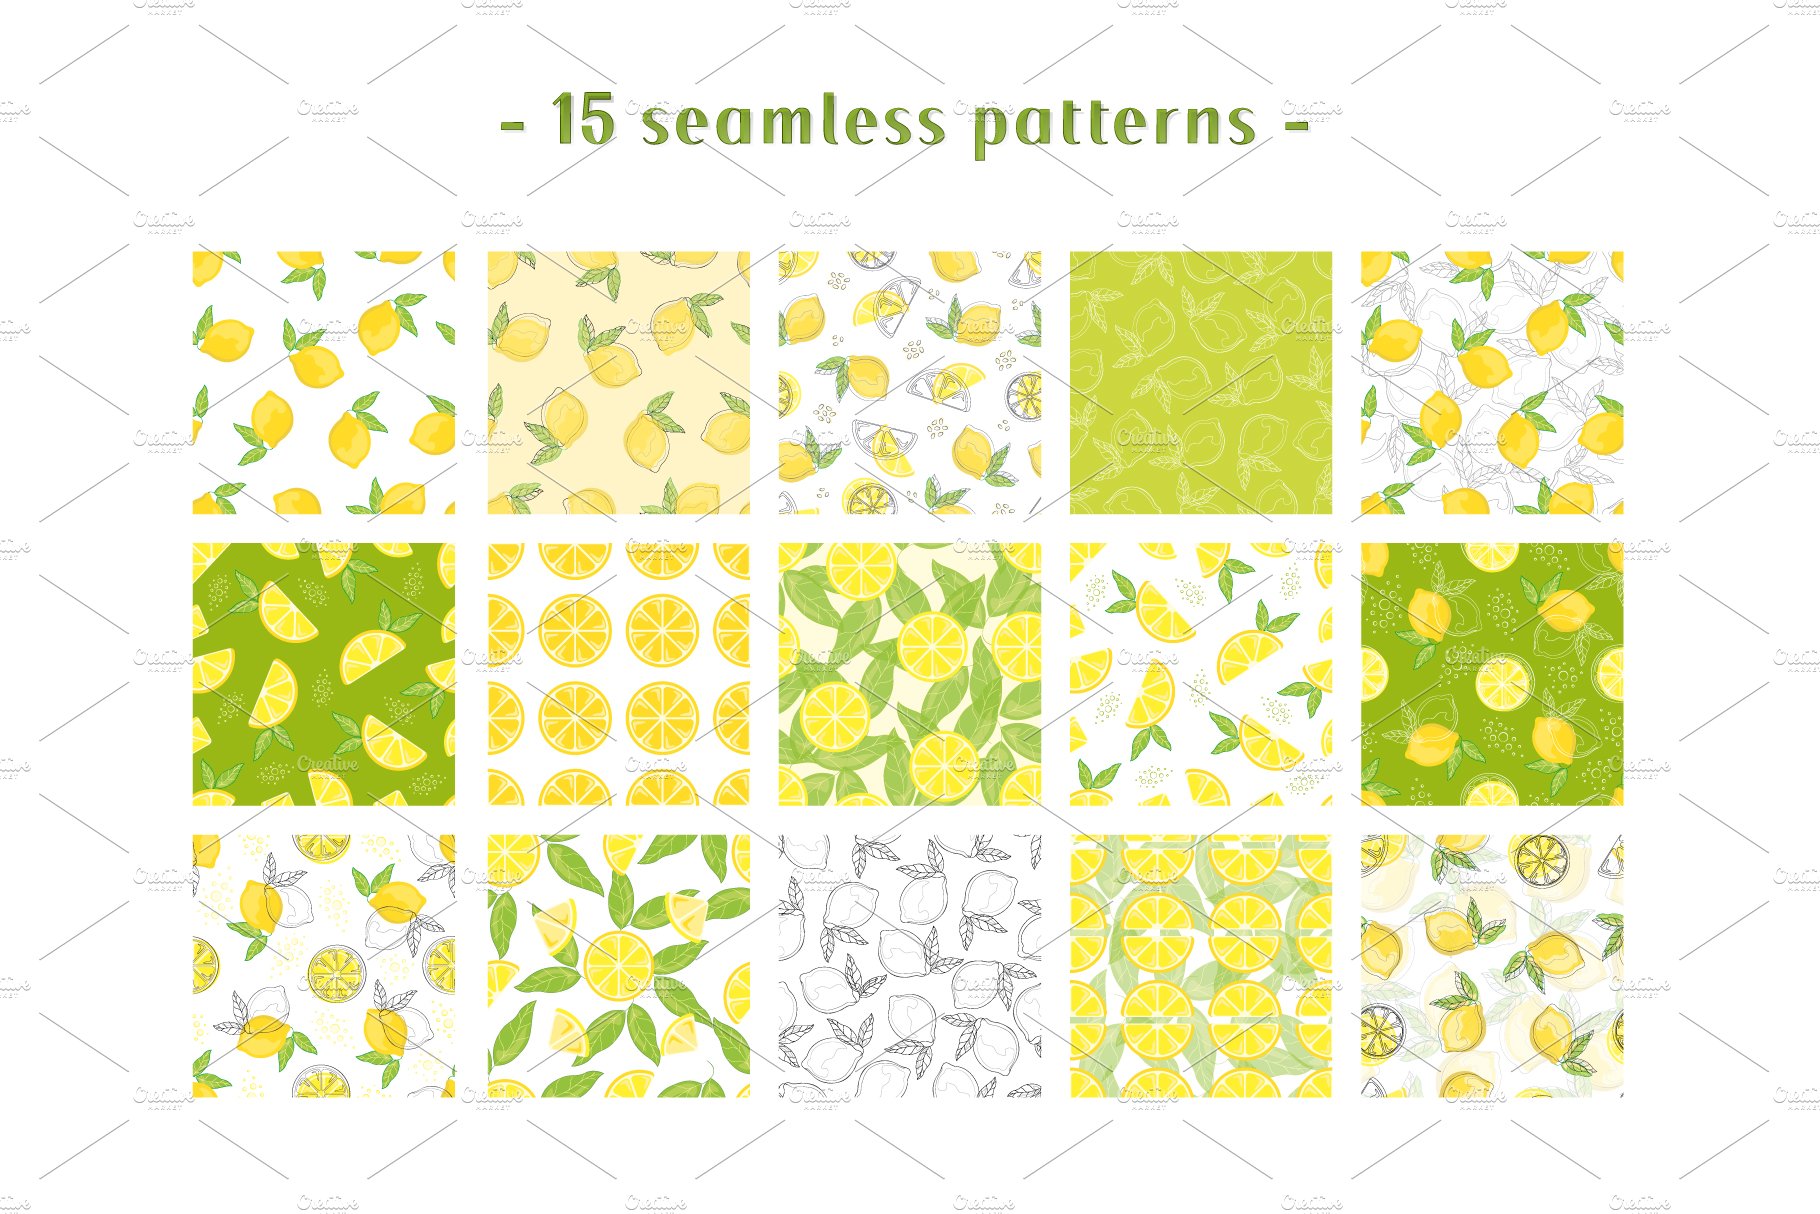 Some lemons patterns.